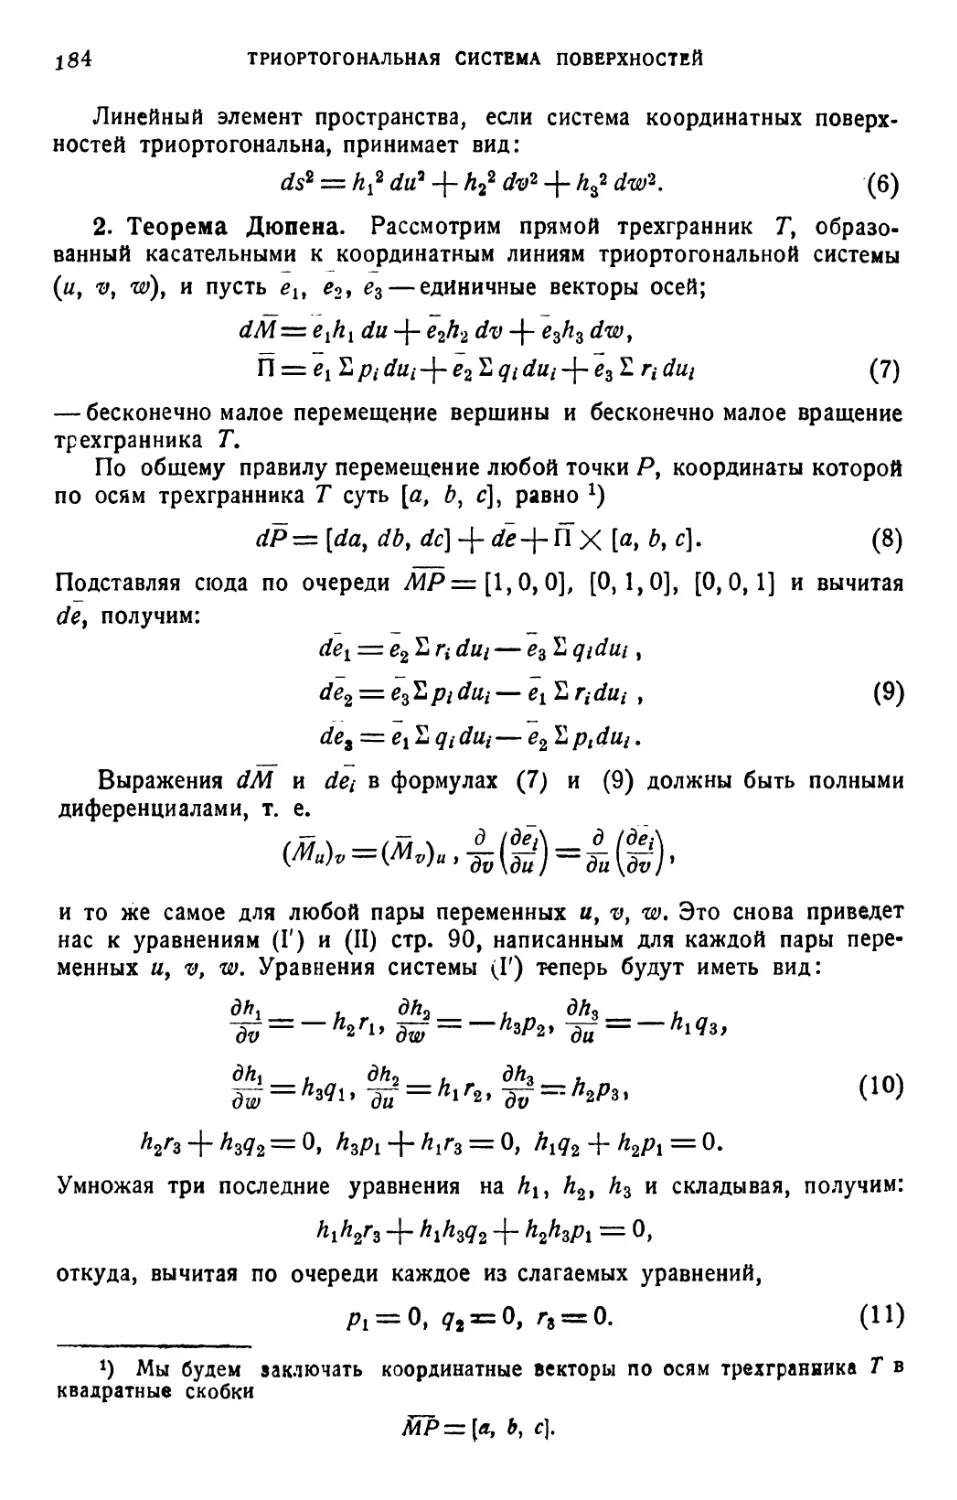 2. Теорема Дюпена